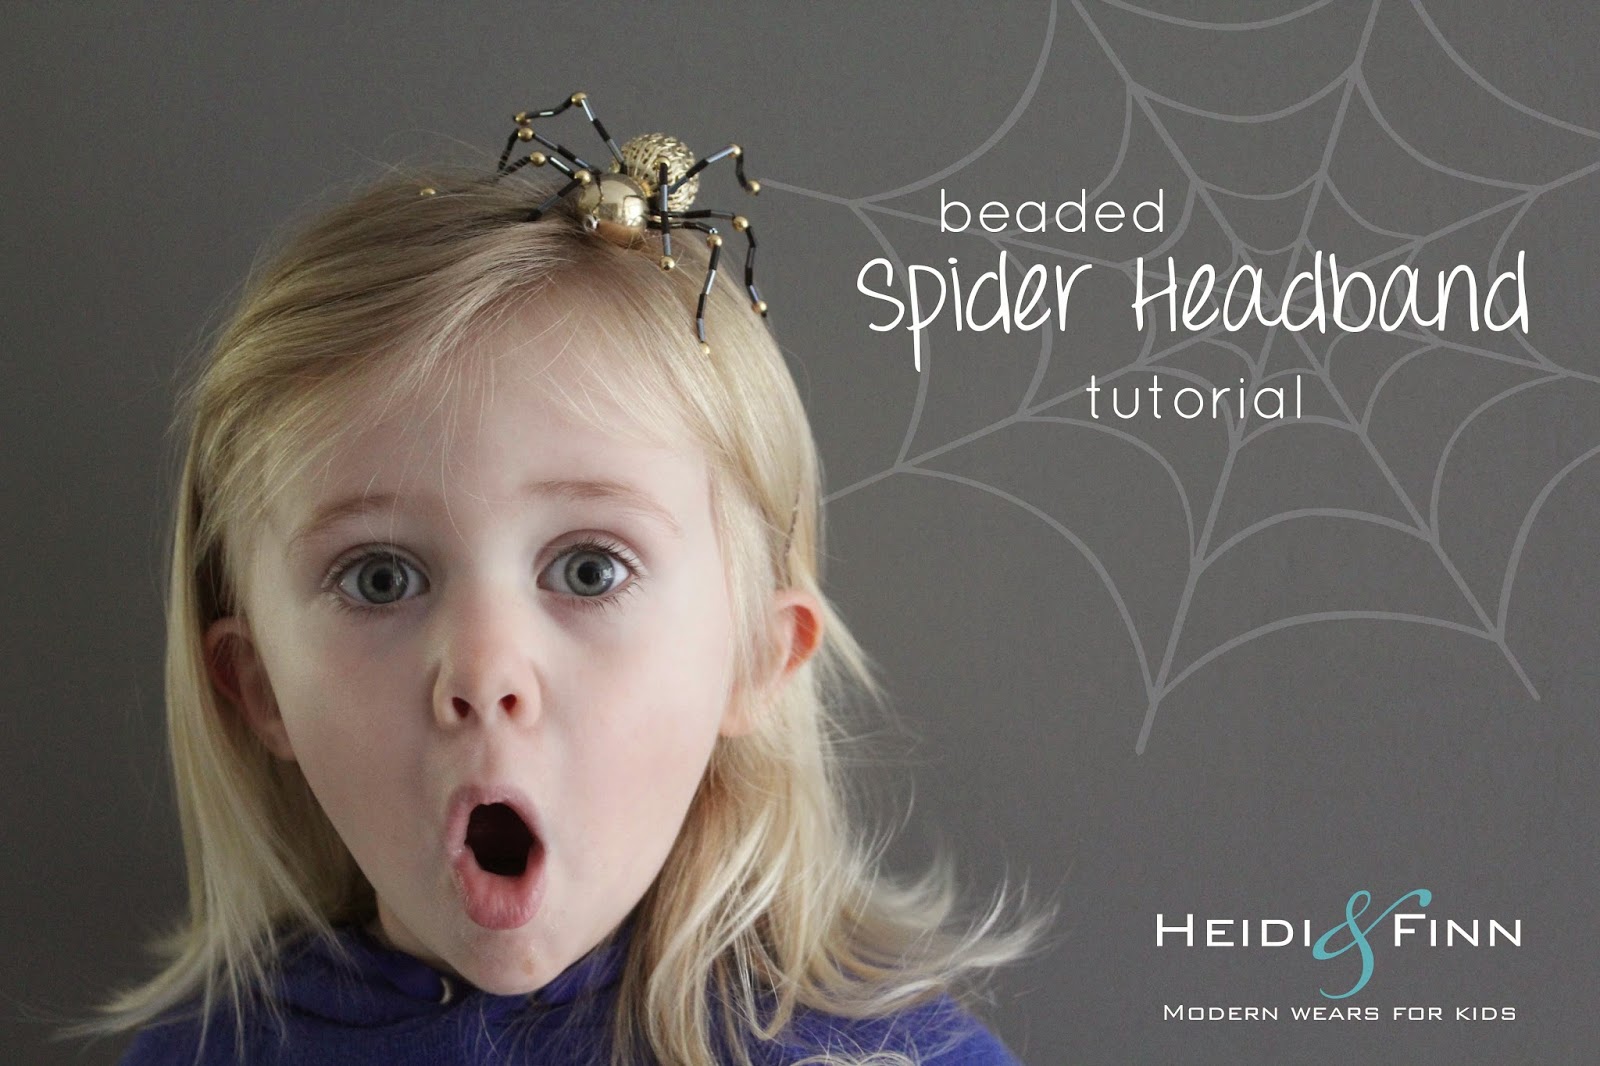 http://www.heidiandfinn.com/2014/10/beaded-spider-headband-tutorial.html